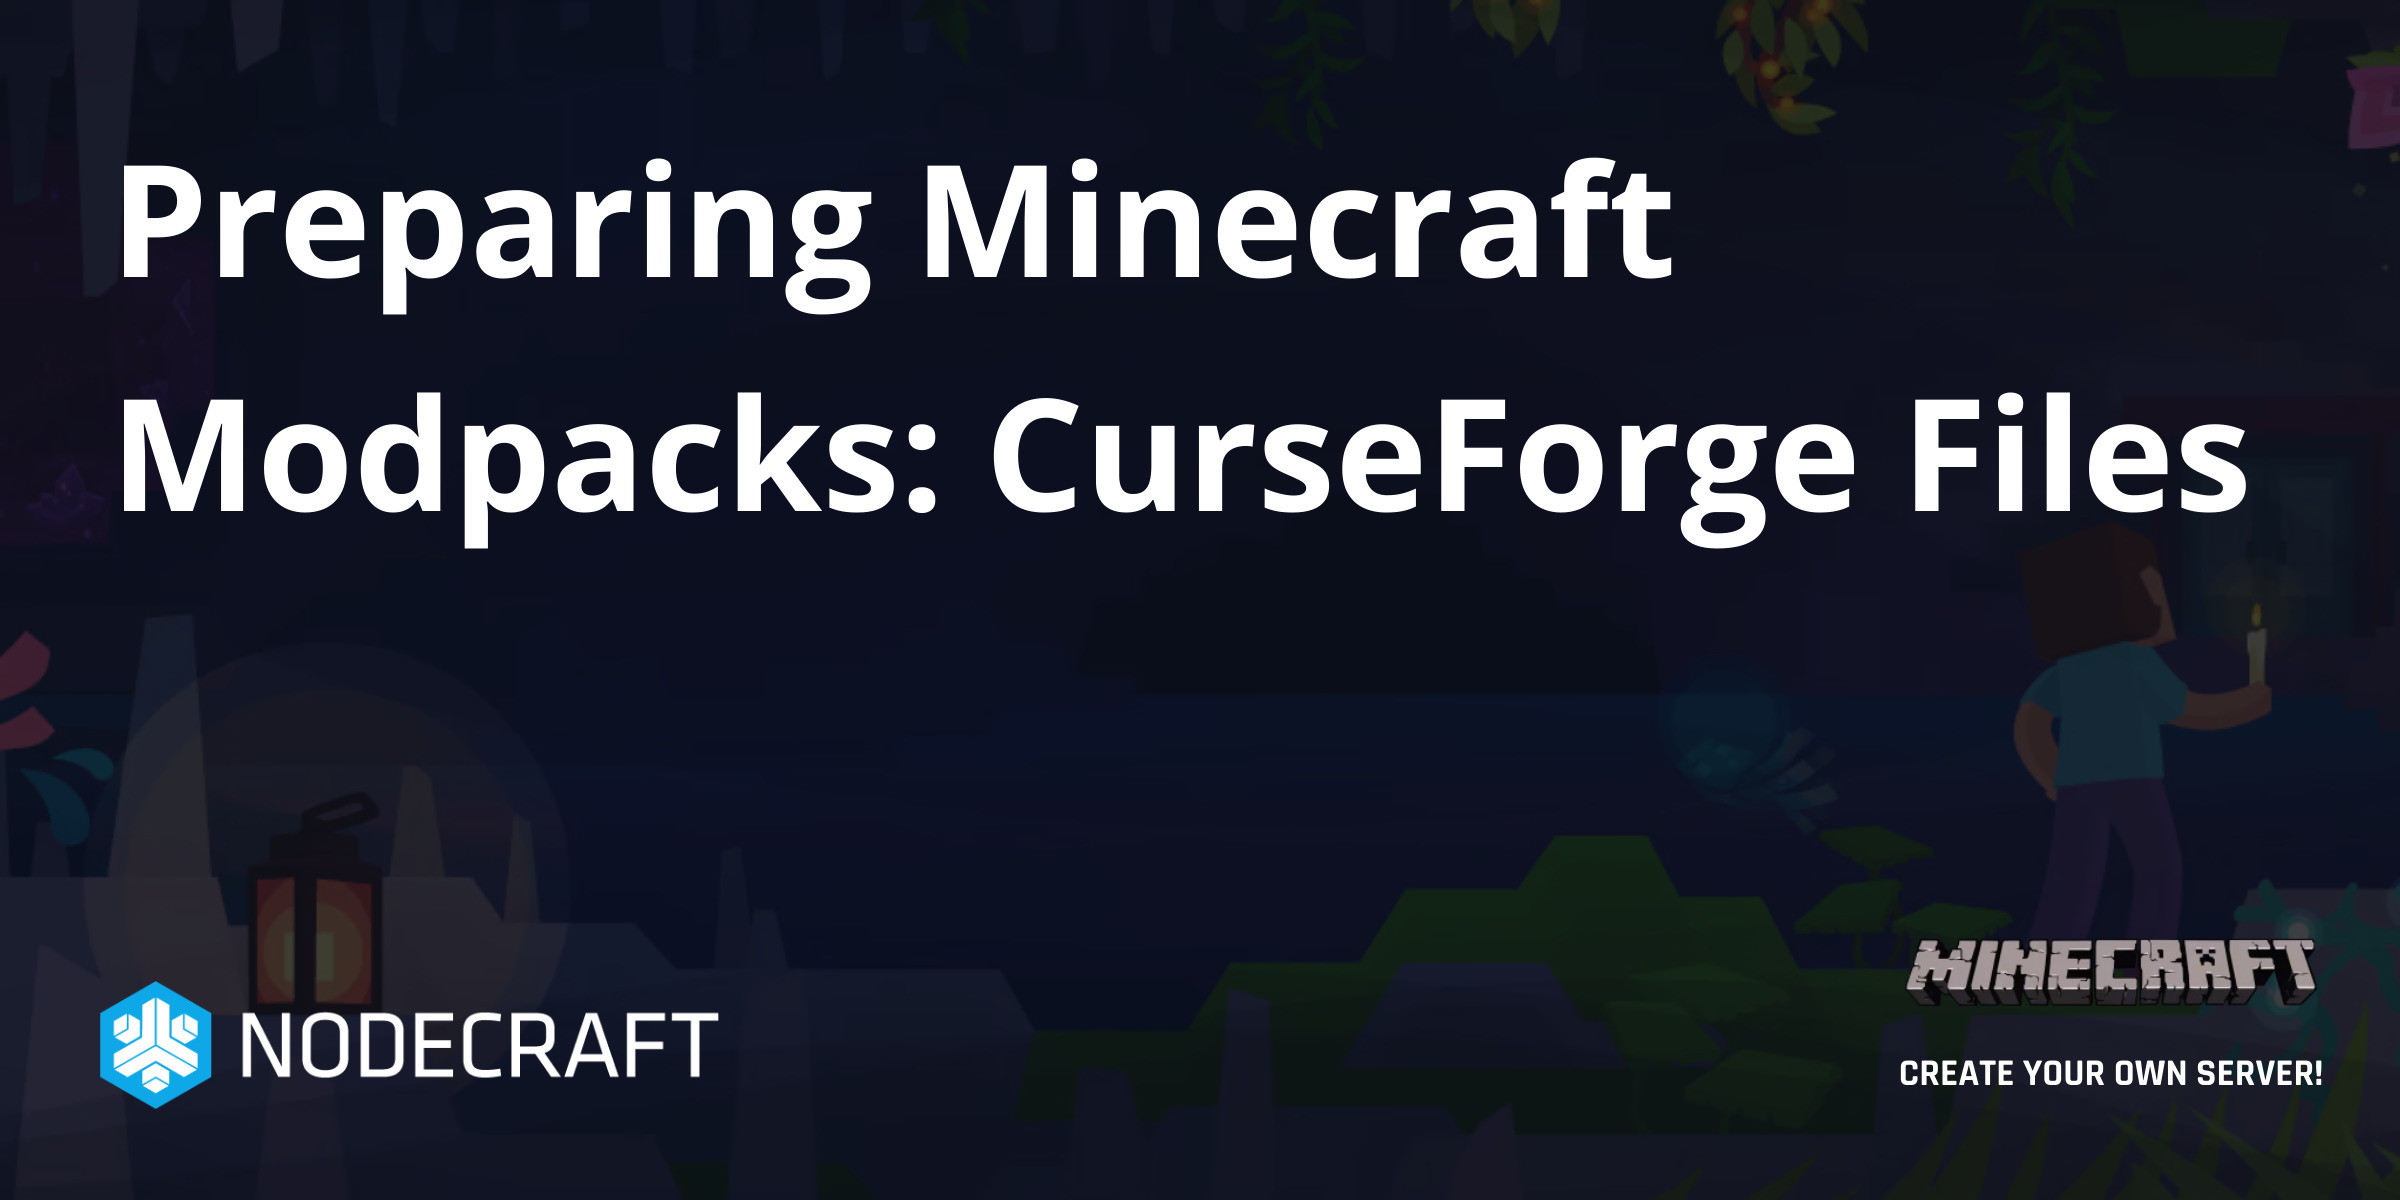 Minecraft Minigame Servers: Top Minecraft Servers - CurseForge